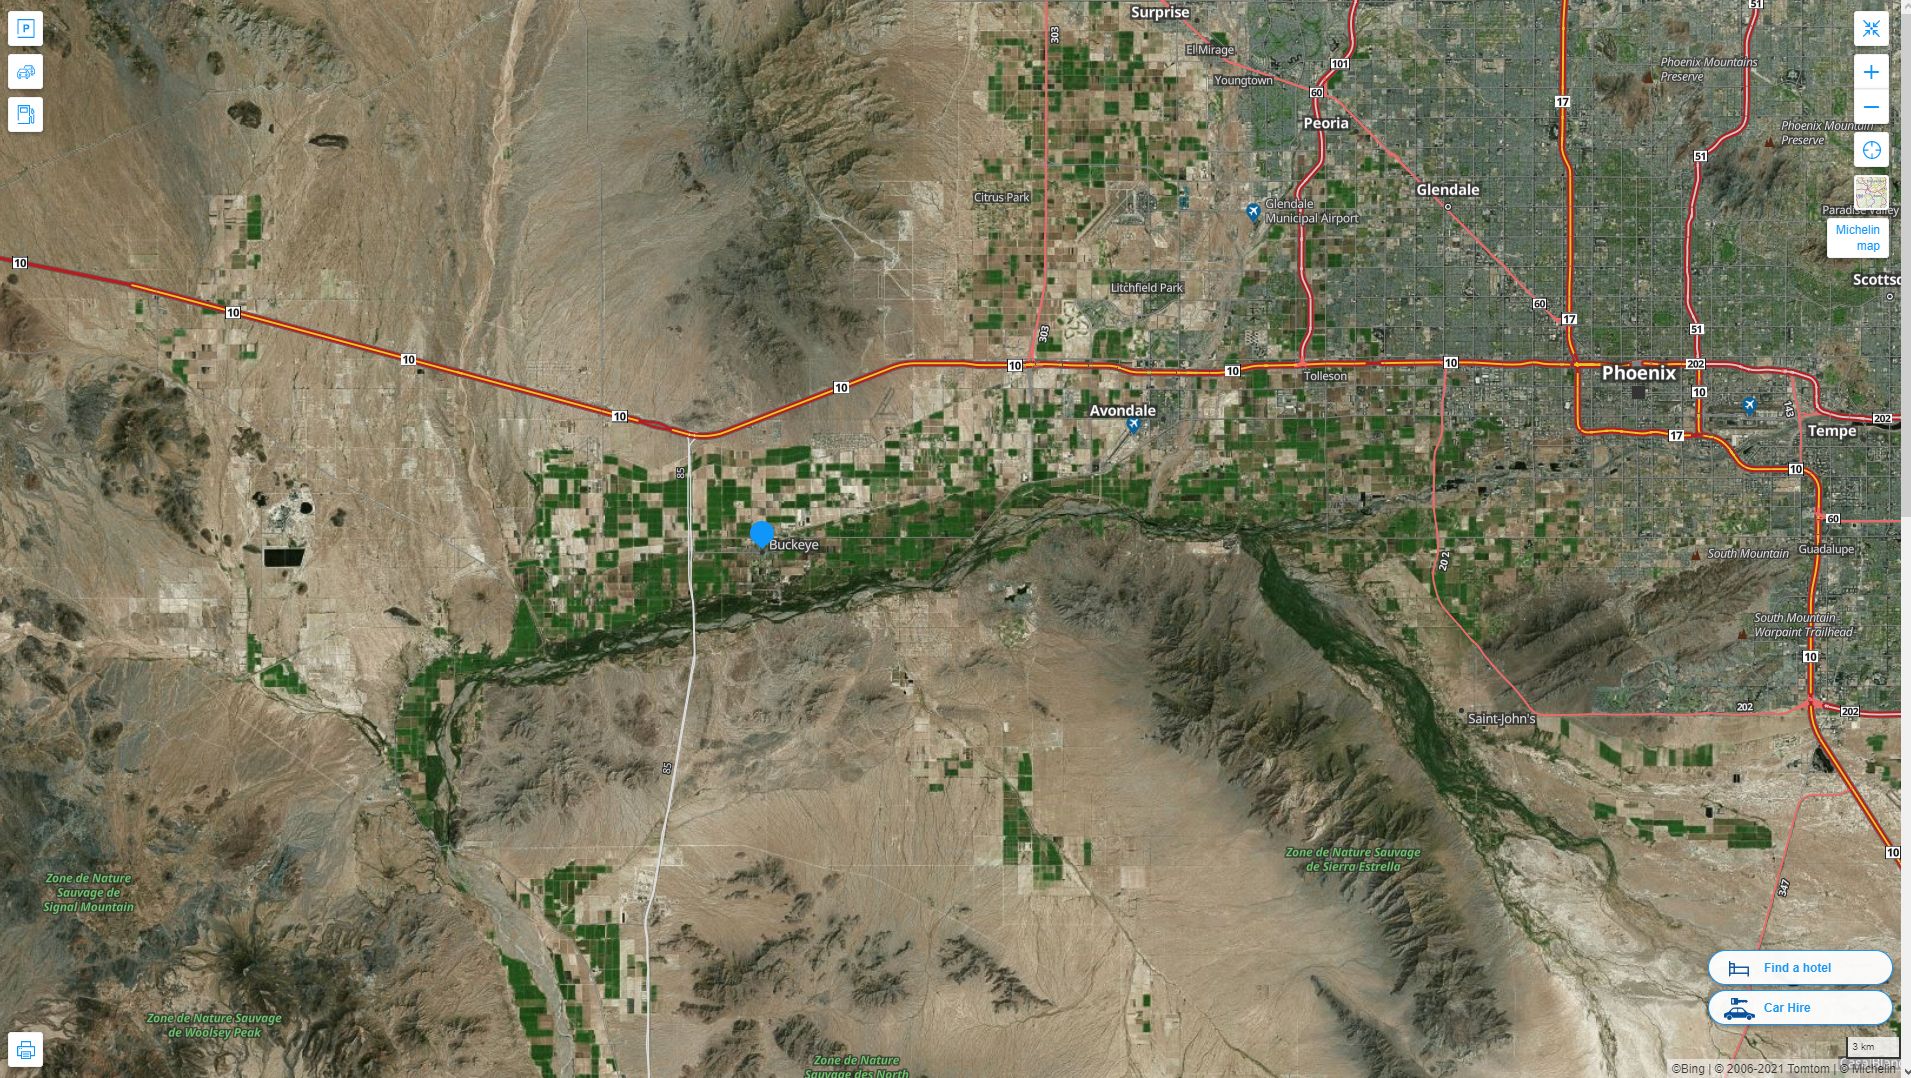 Buckeye Arizona Highway and Road Map with Satellite View